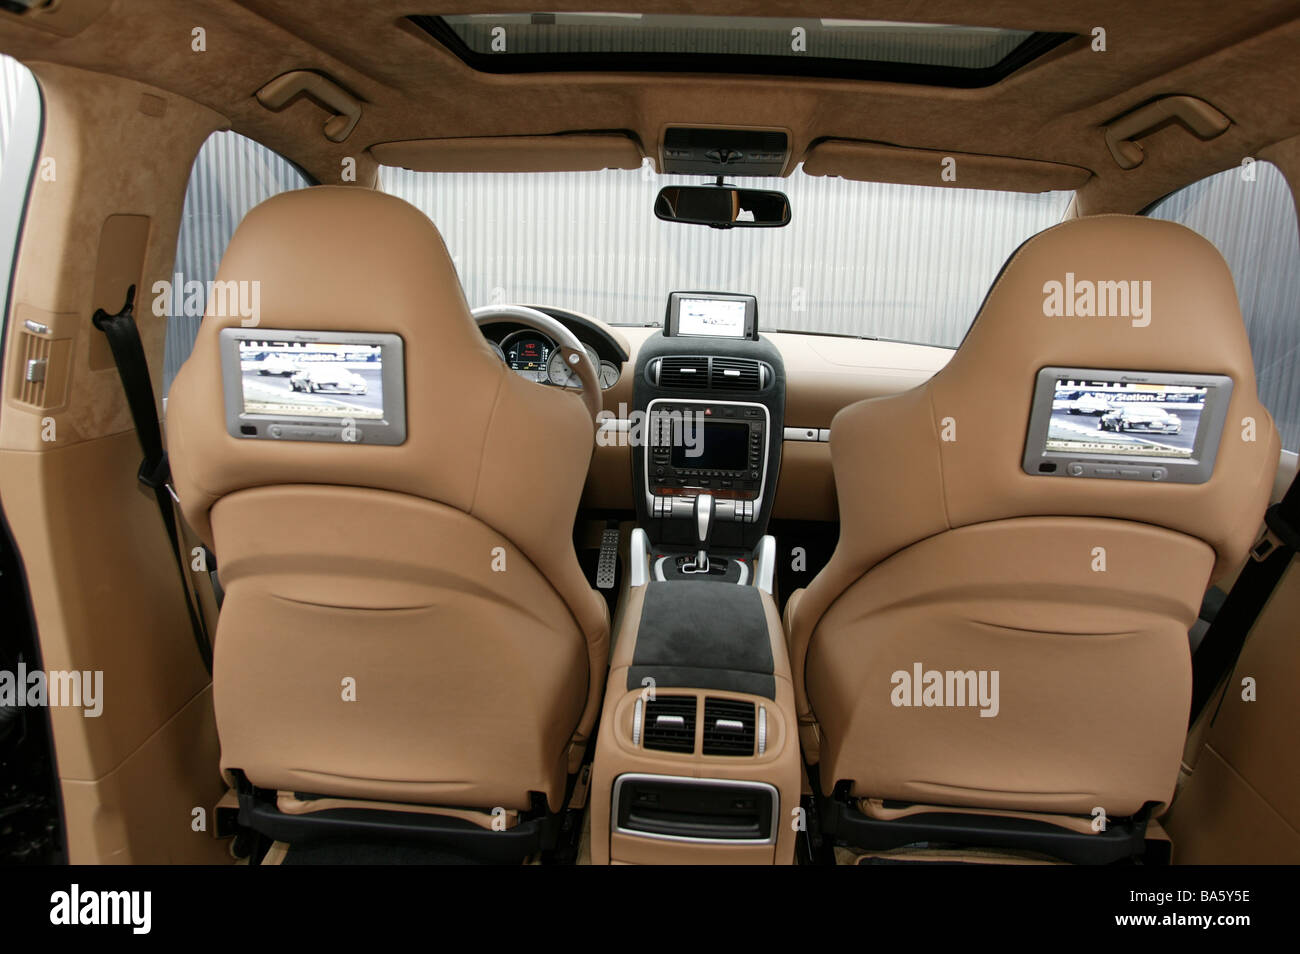 Car front seats fotografías e imágenes de alta resolución - Alamy